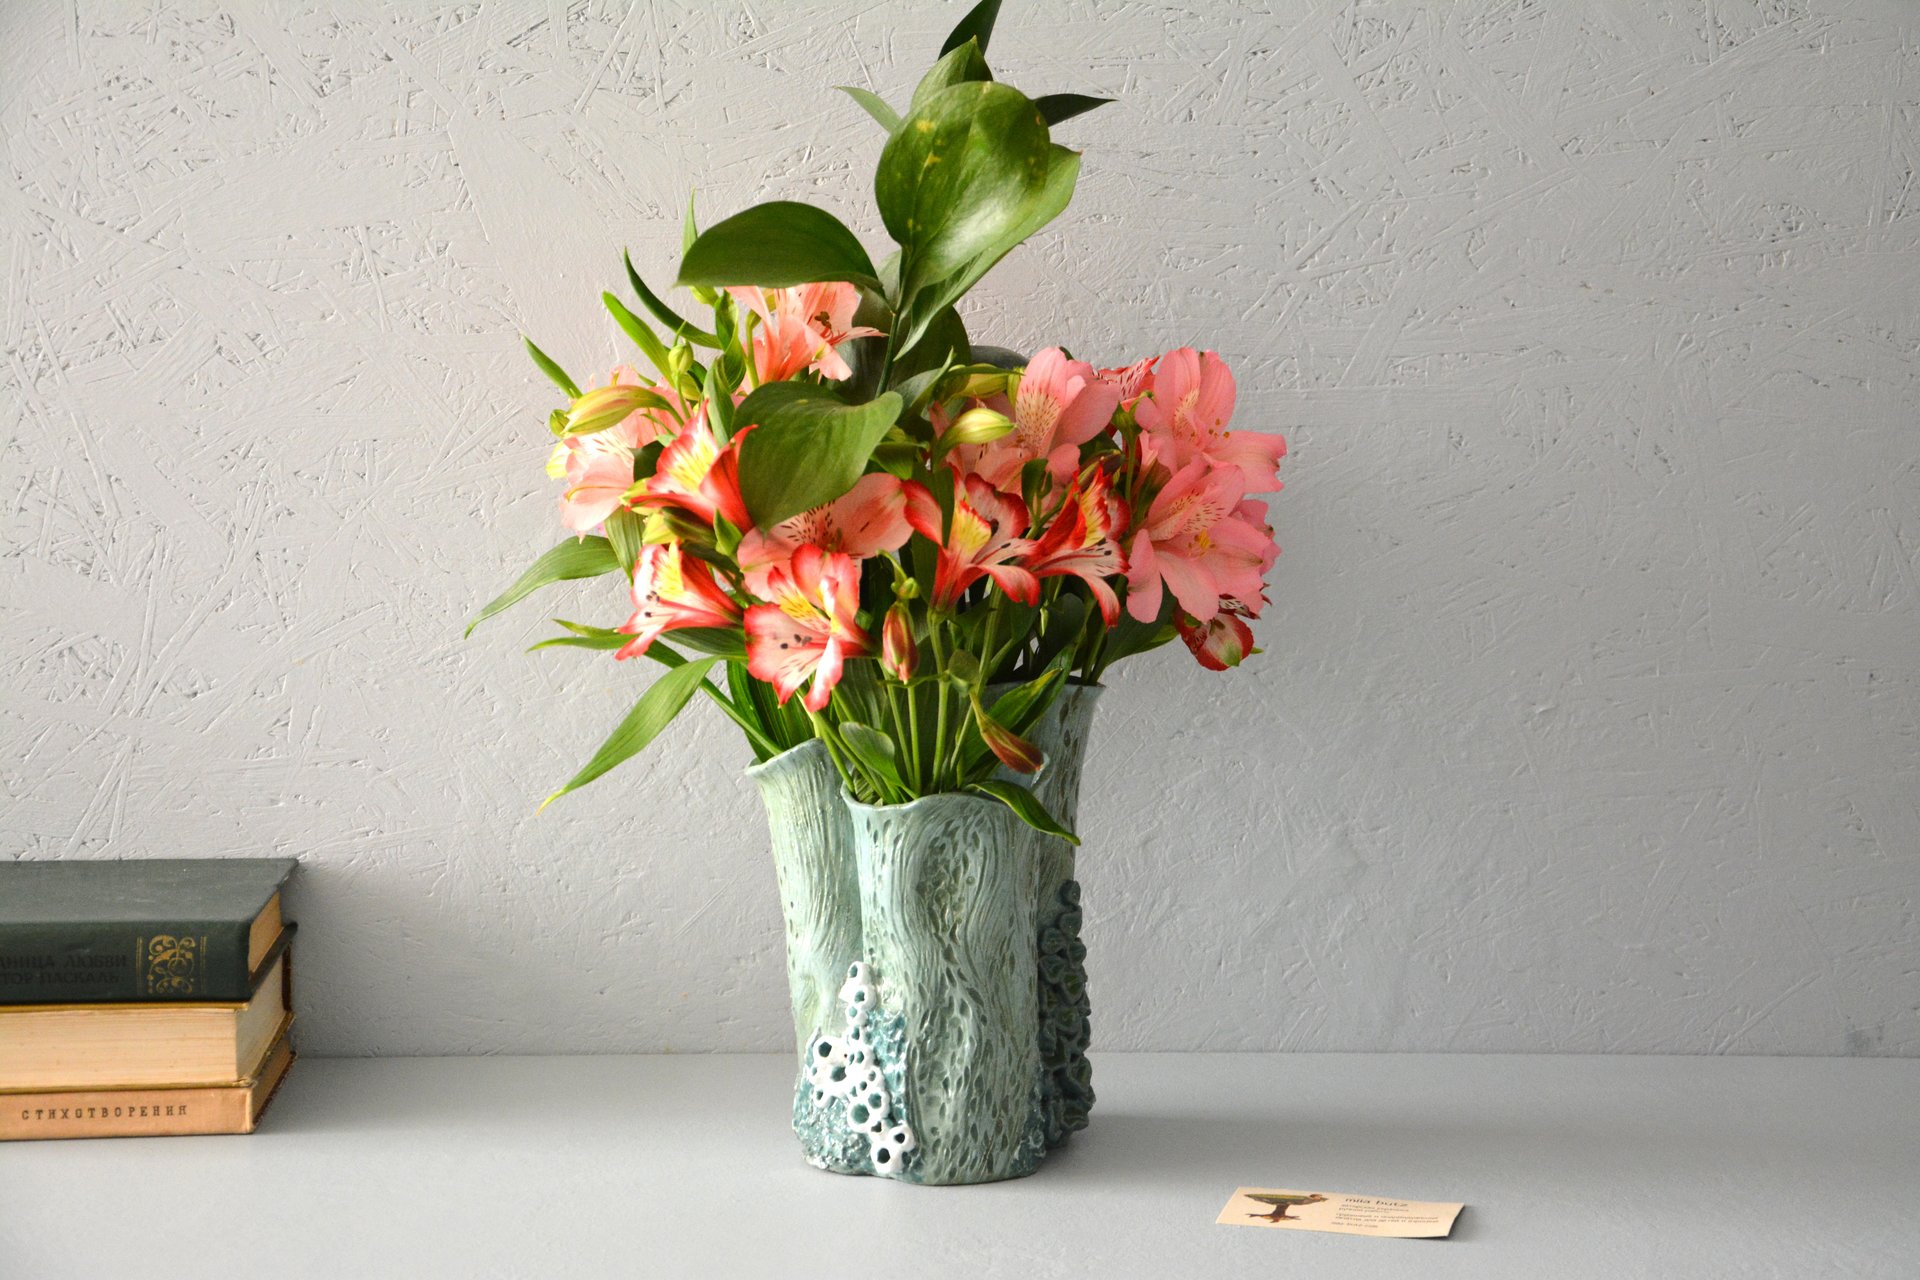 Decorative ceramic flower vase — Coral, height - 19 cm, photo 3 of 5. 1044.